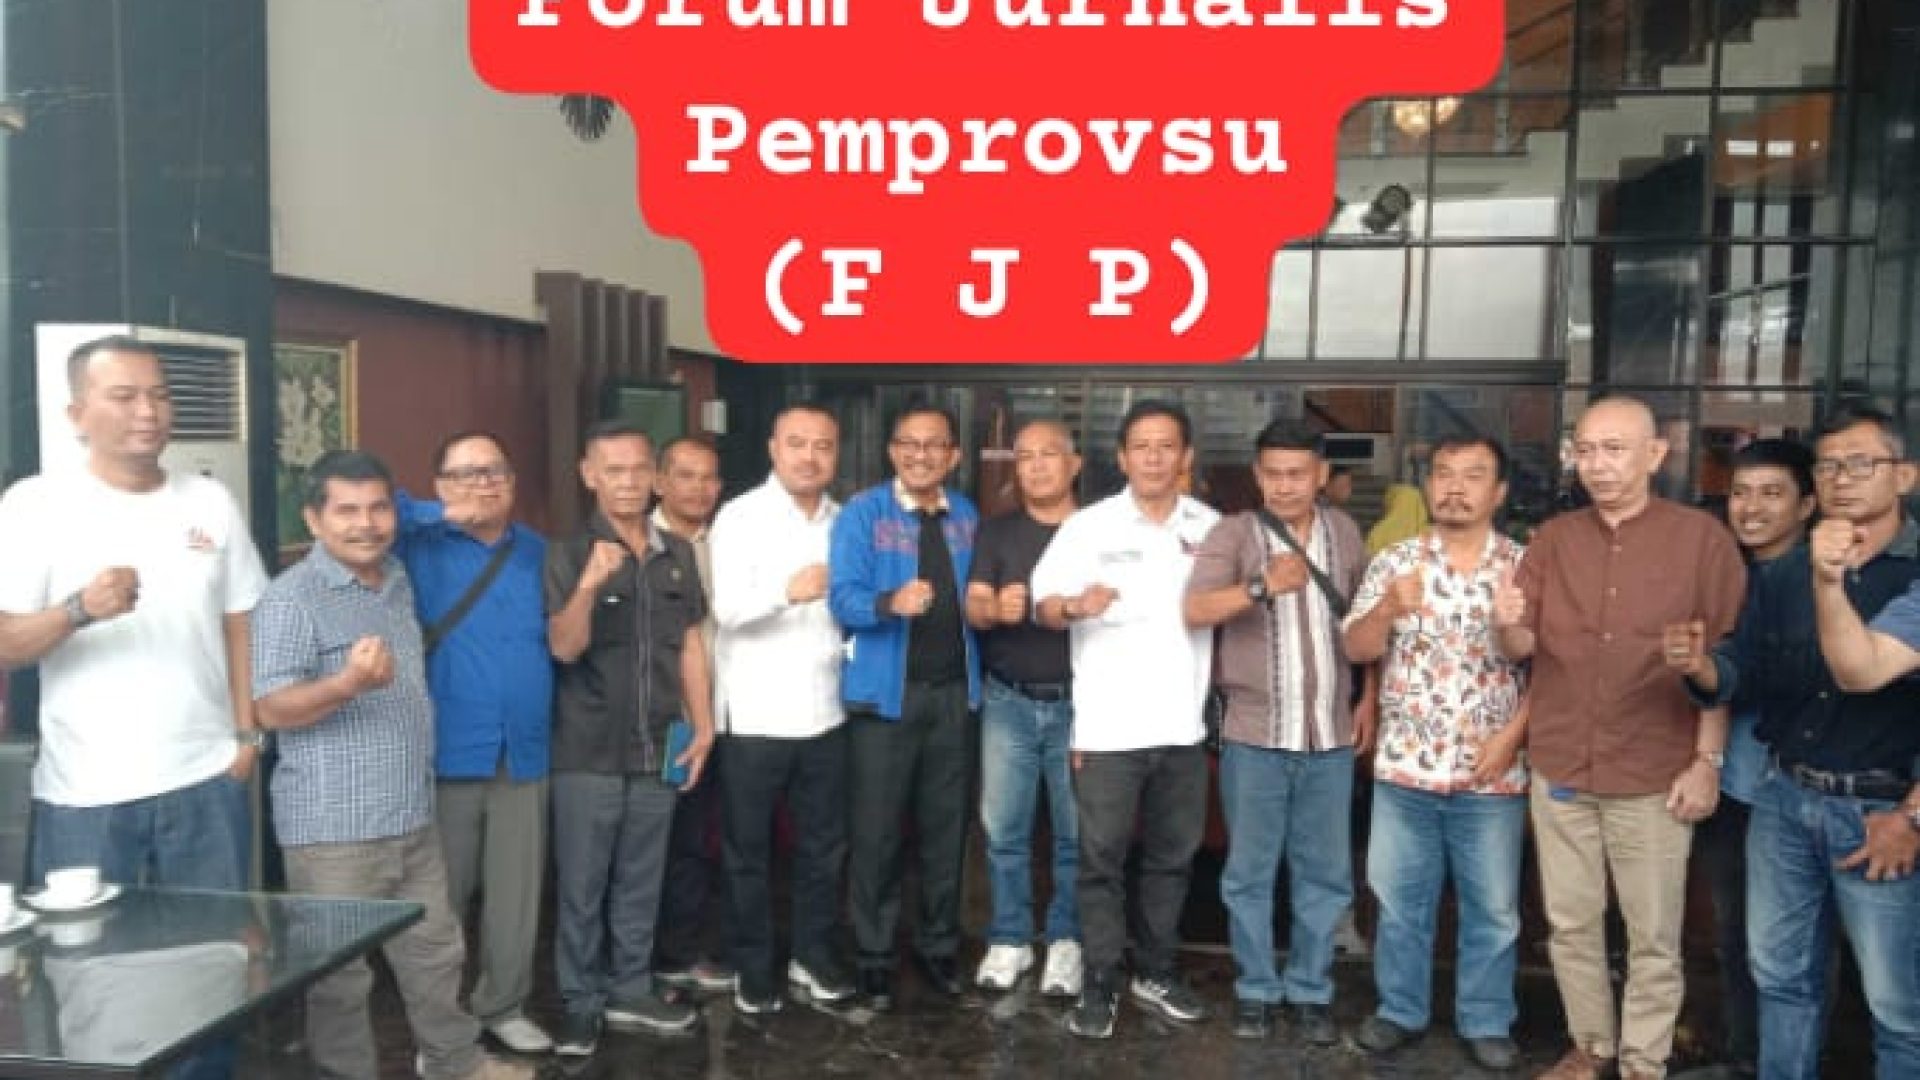 FOTO BERSAMA: Wartawan yang tergabung dalam Forum Jurnalis Pemprov Sumatera Utara foto bersama usai Uji Kompetensi Wartawan. (Rizky/Mediaseruni)